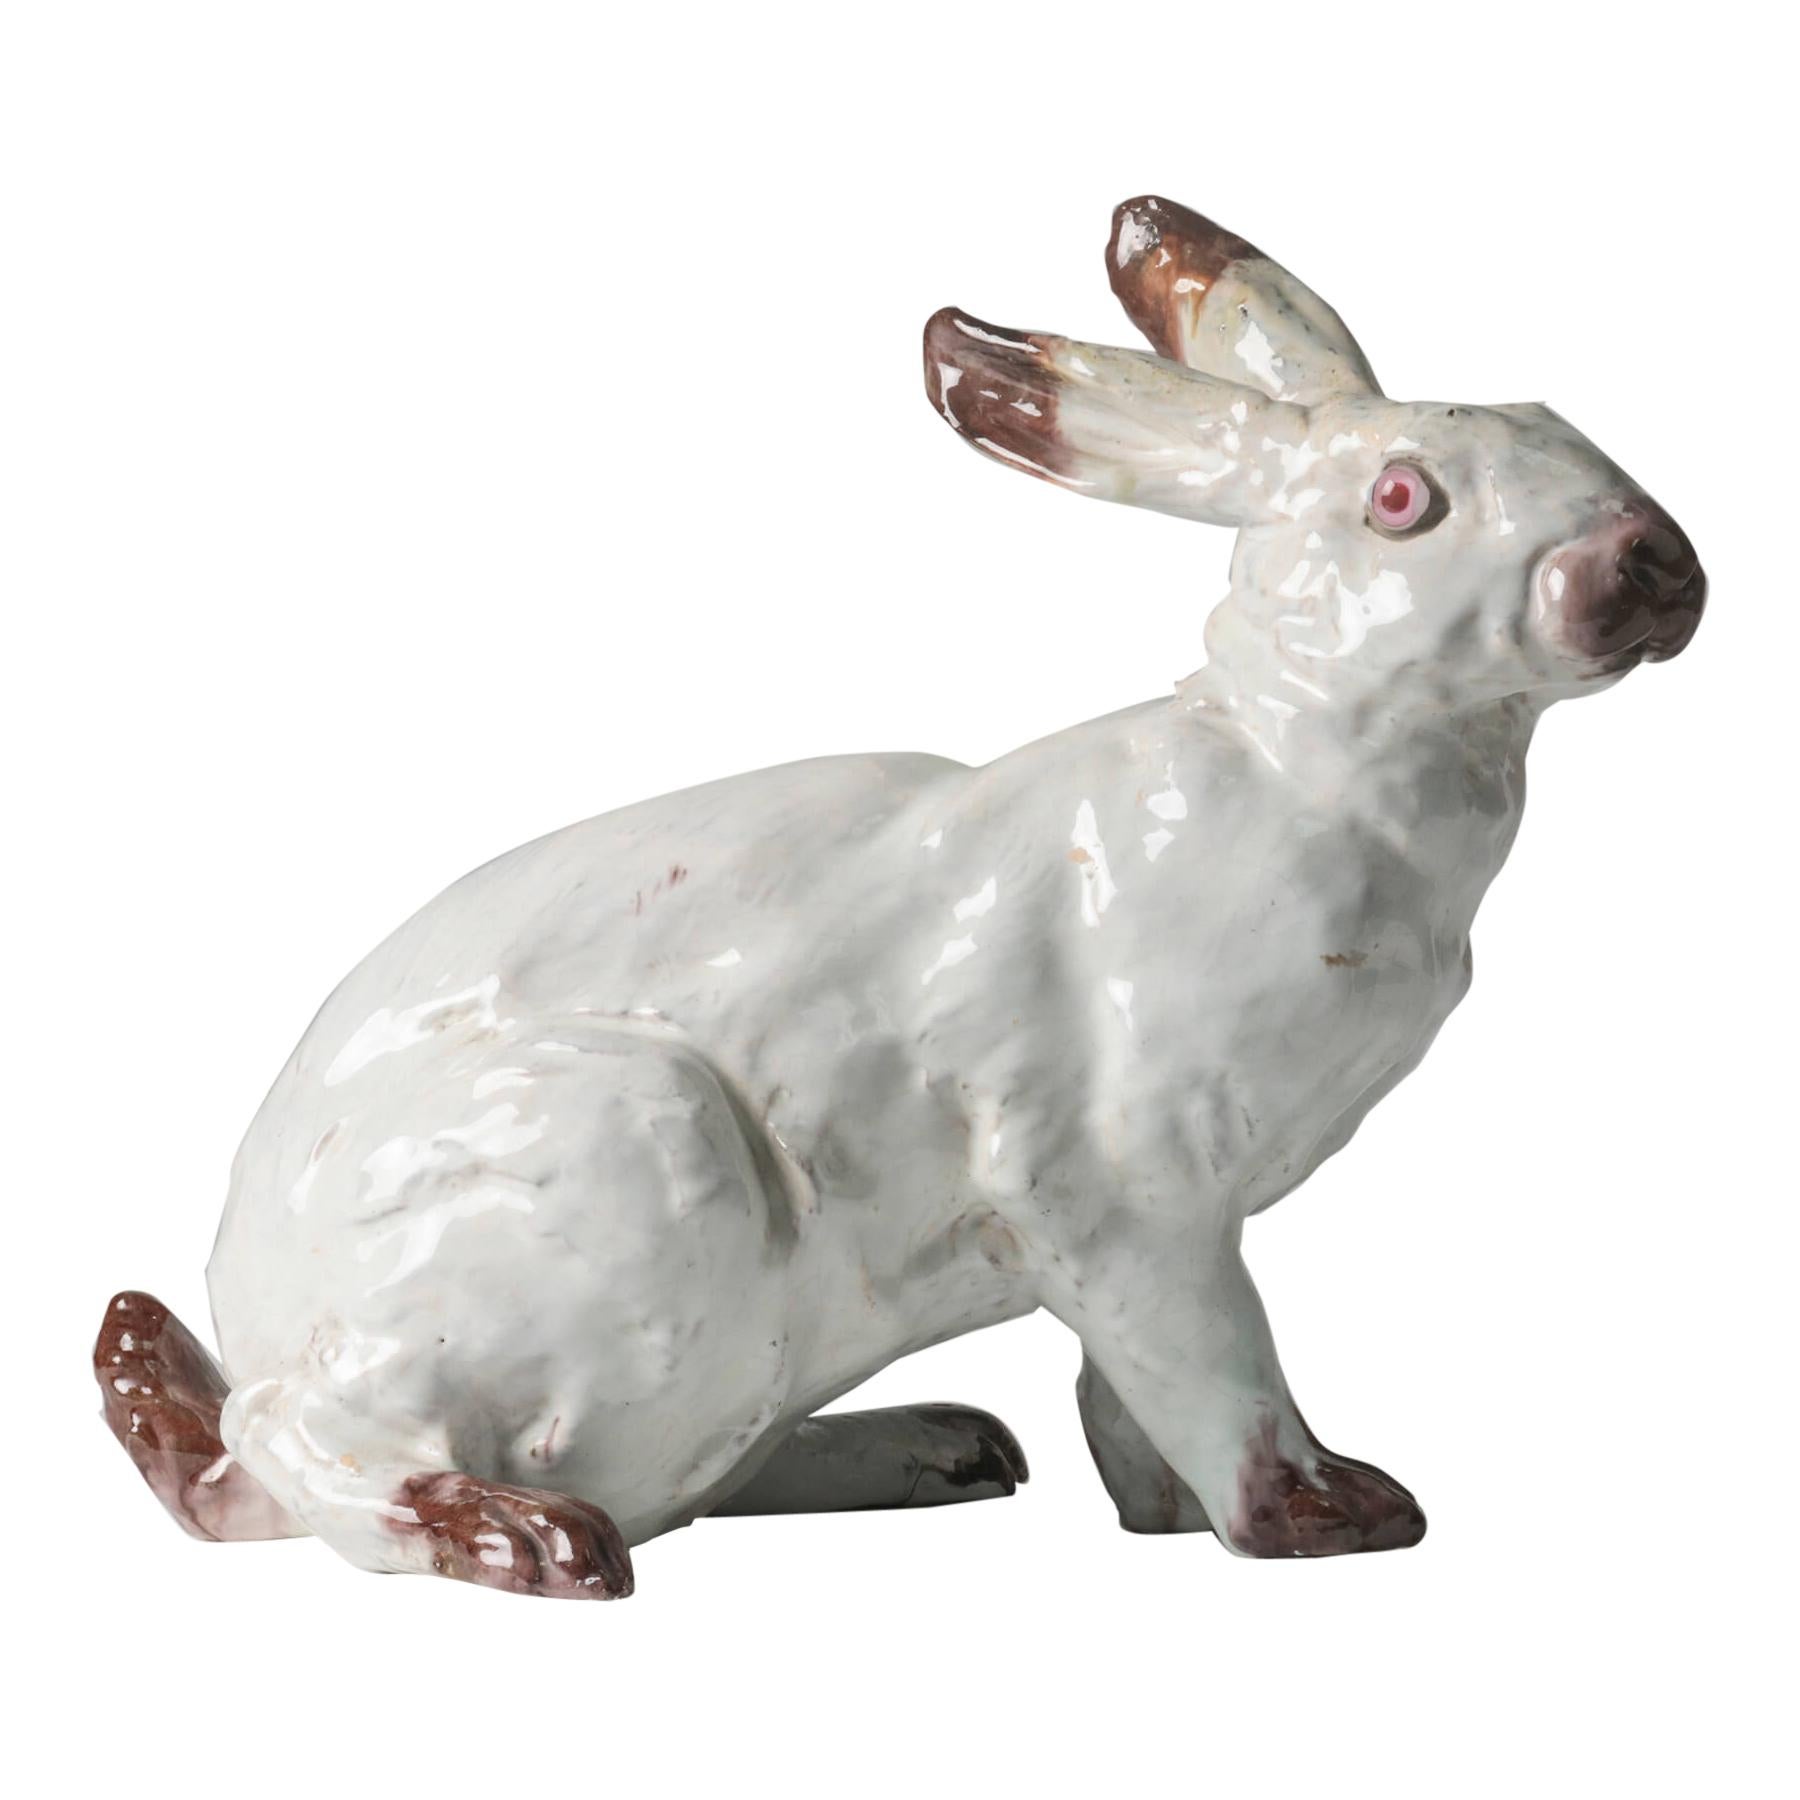 19th Century Ceramic Sculpture of a Rabbit by J. Filmont Caen, France